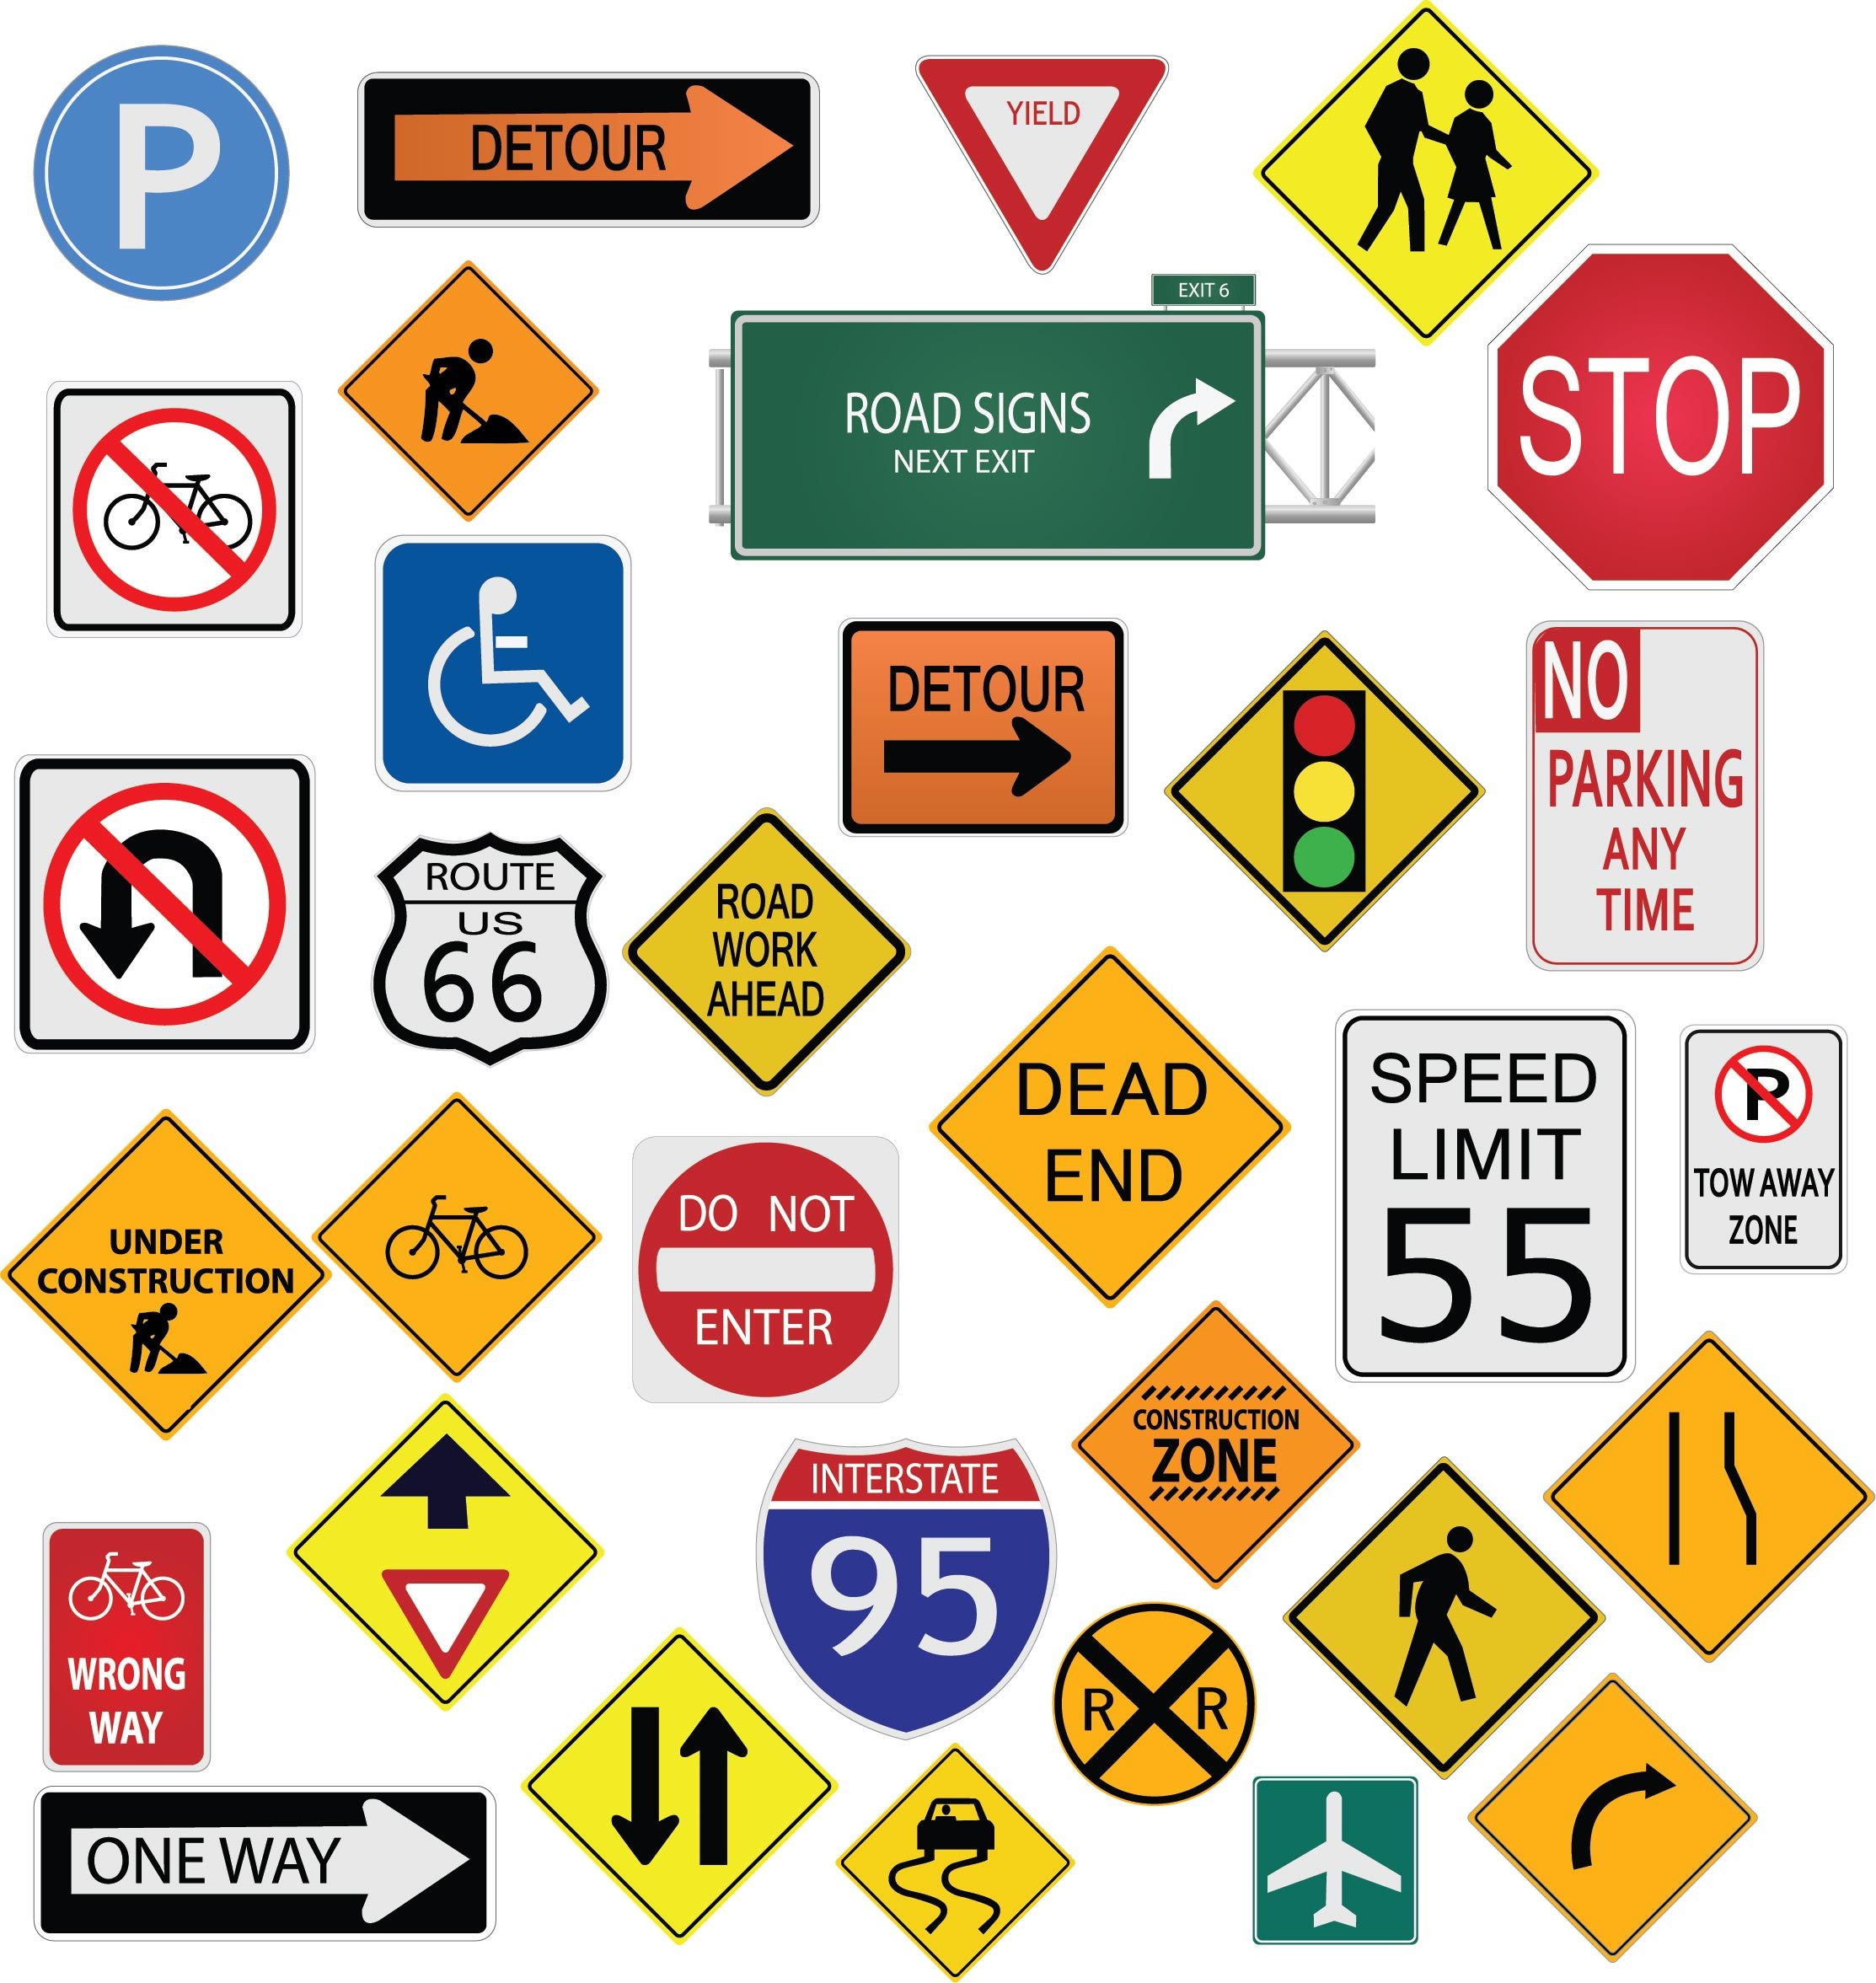 Road Signs | Requirements | Traffic | Regulatory | Brandon Industries ...